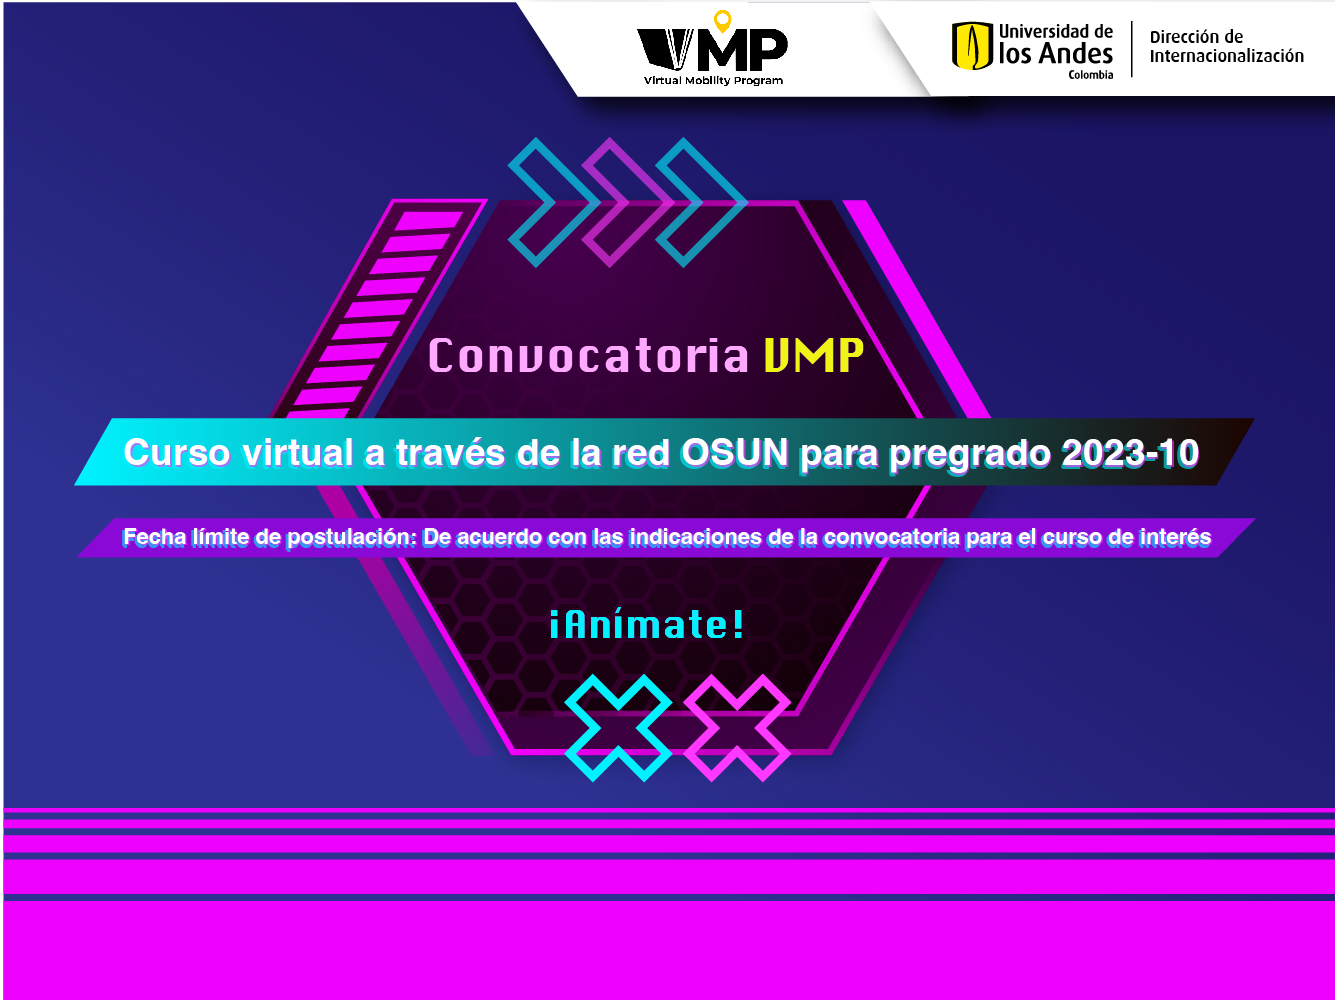 Convocatoria VMP curso virtual de la red OSUN para pregrado 2023-